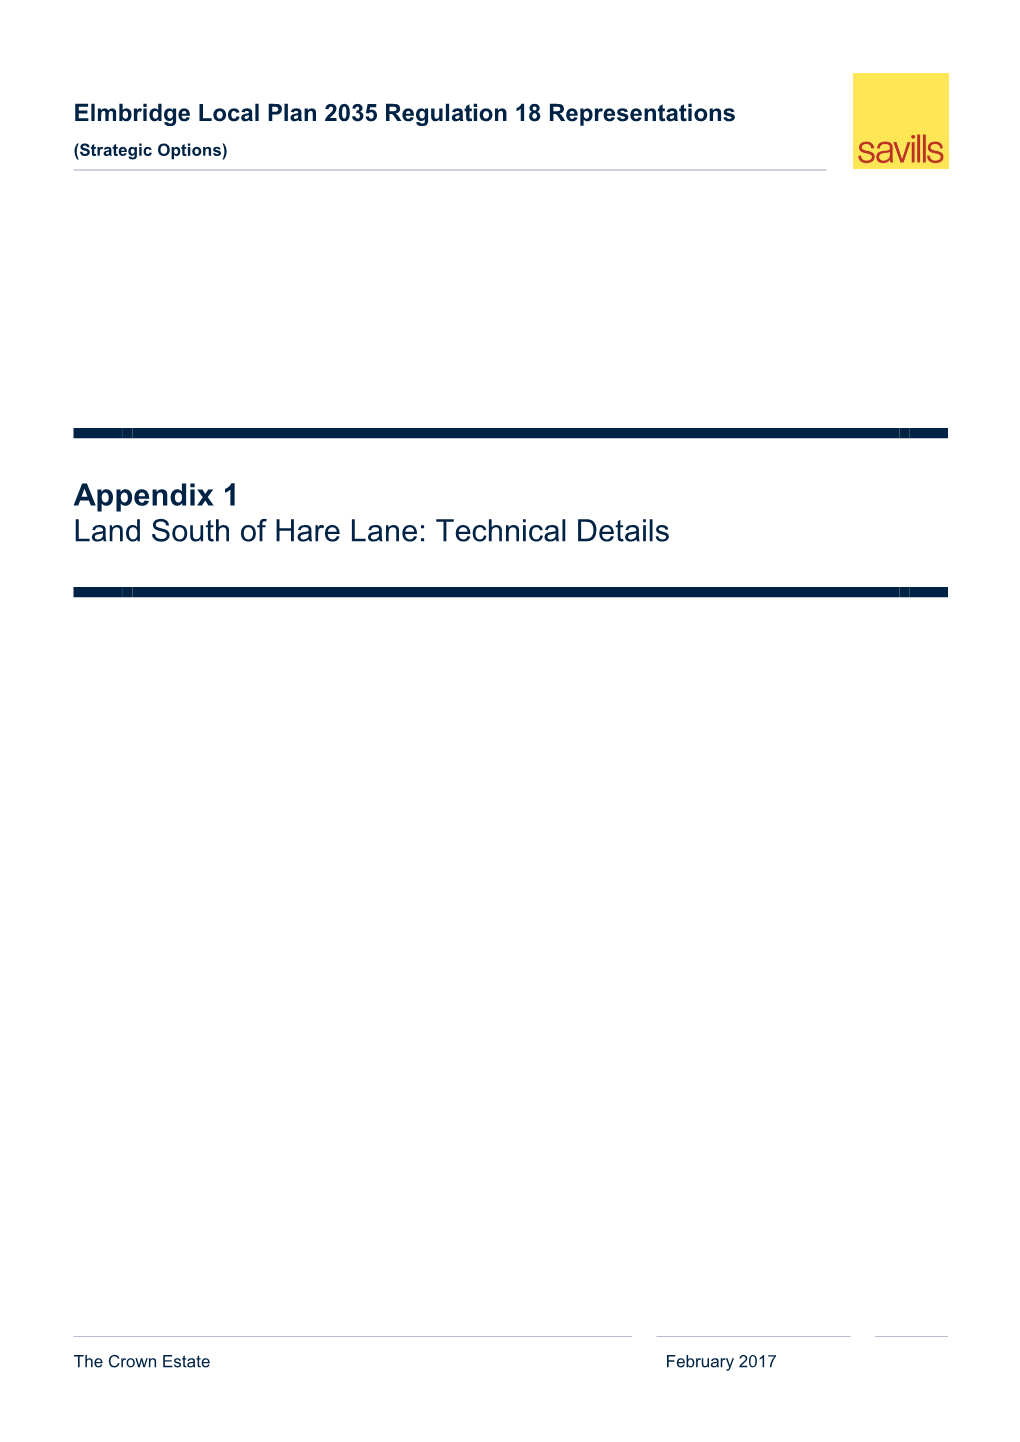 Appendix 1 Land South of Hare Lane: Technical Details